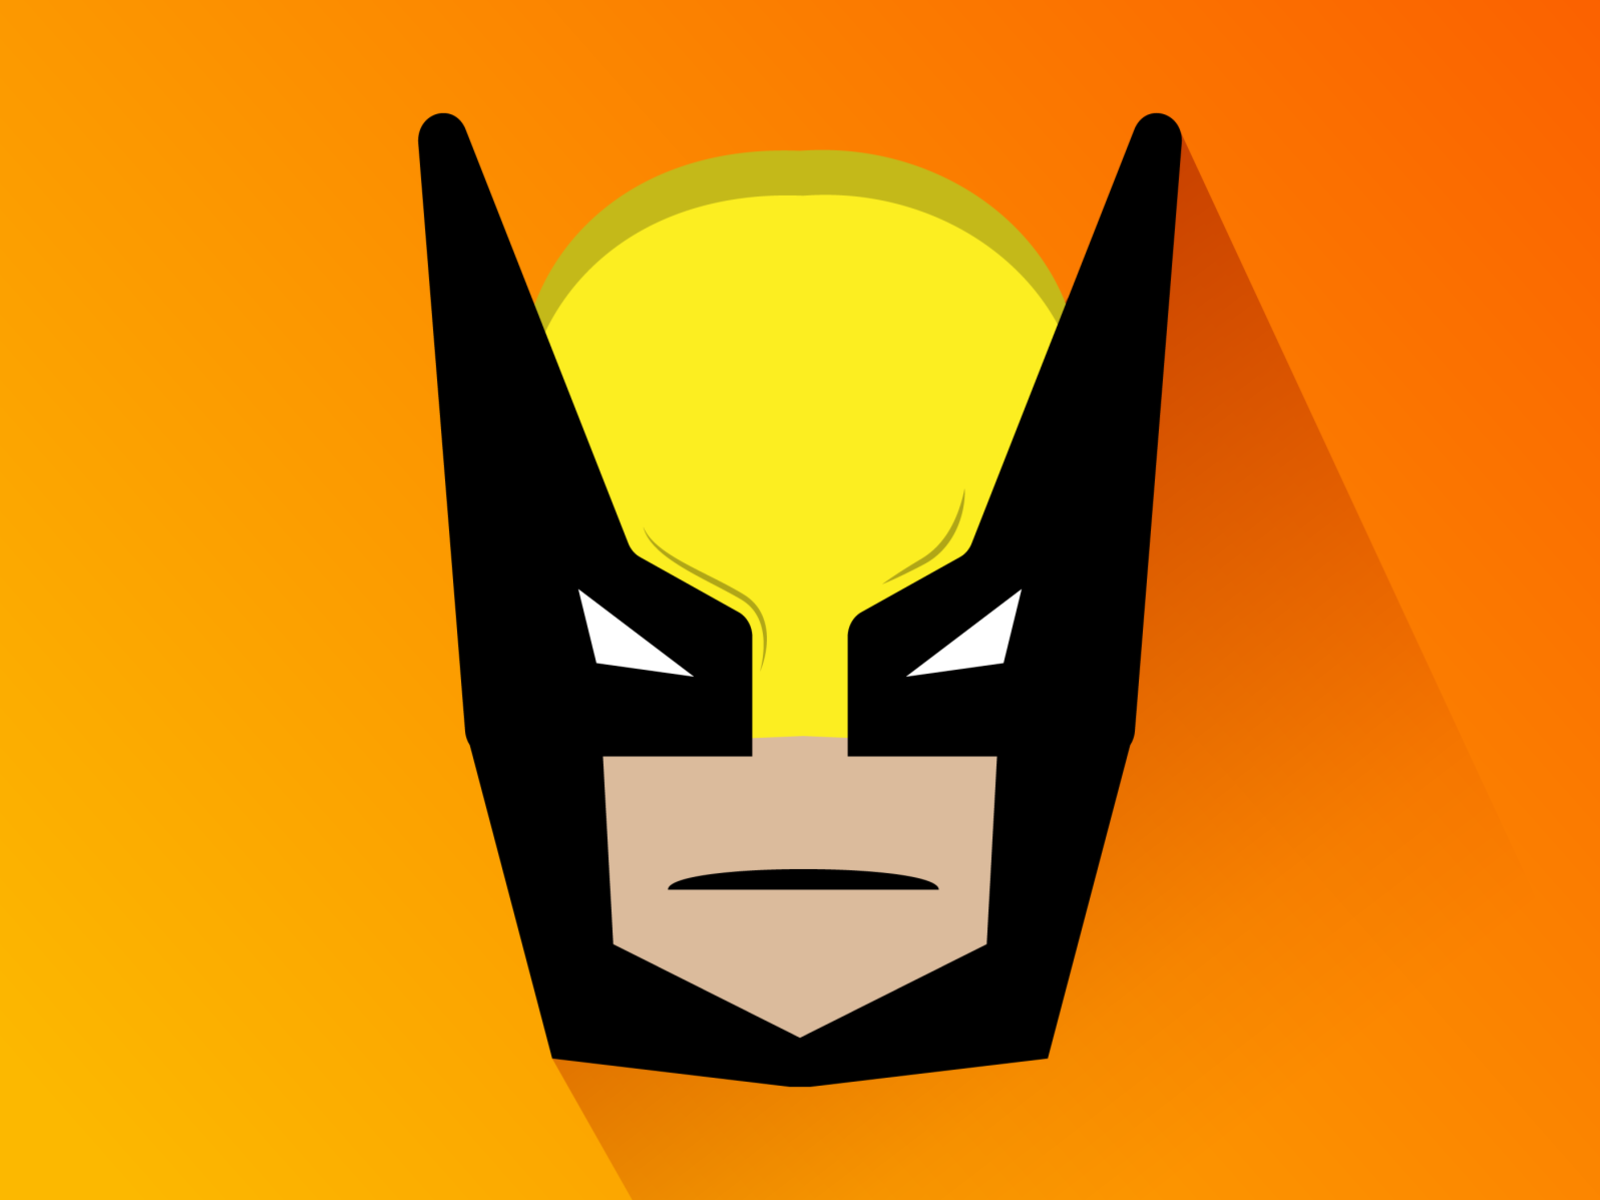 Wolverine ( or 2 Batmans kissing ) by Guru Graphics on Dribbble